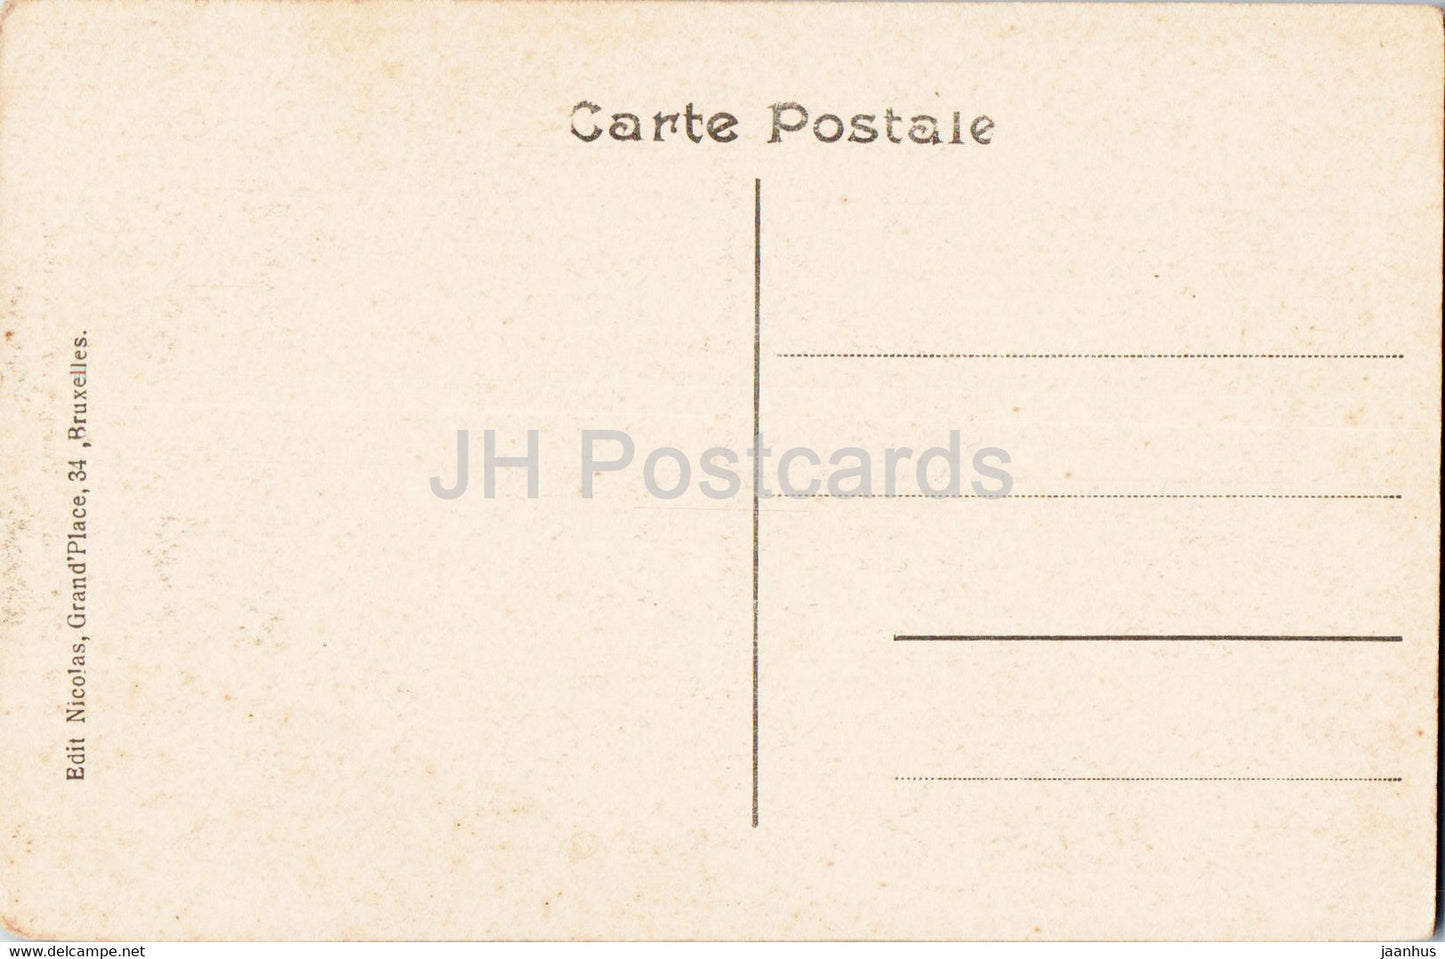 Brüssel - Brüssel - Colonne du Congres - Kongresssäule - alte Postkarte - Belgien - unbenutzt